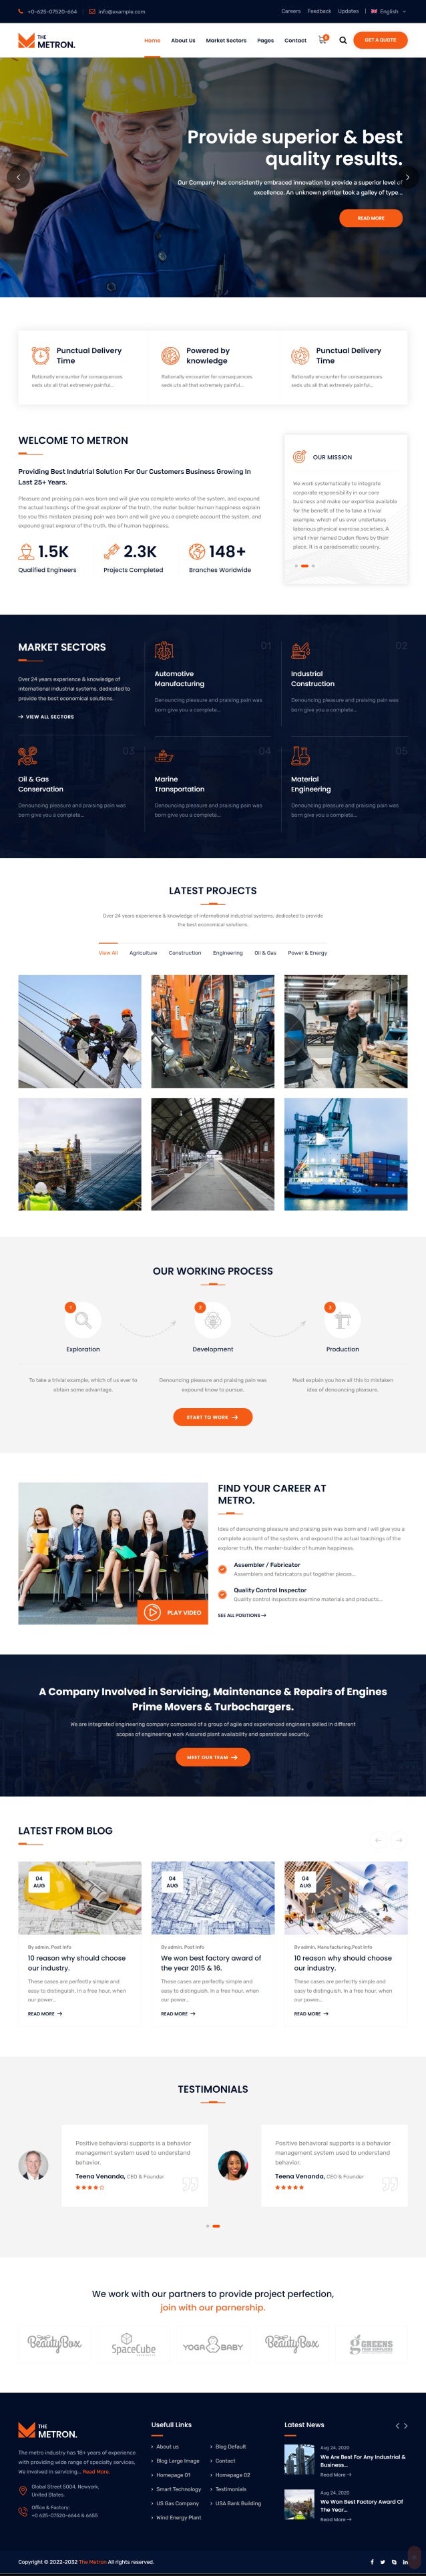 Professional Construction or Business Website Landing Page Design - ⭐ON SALE⭐